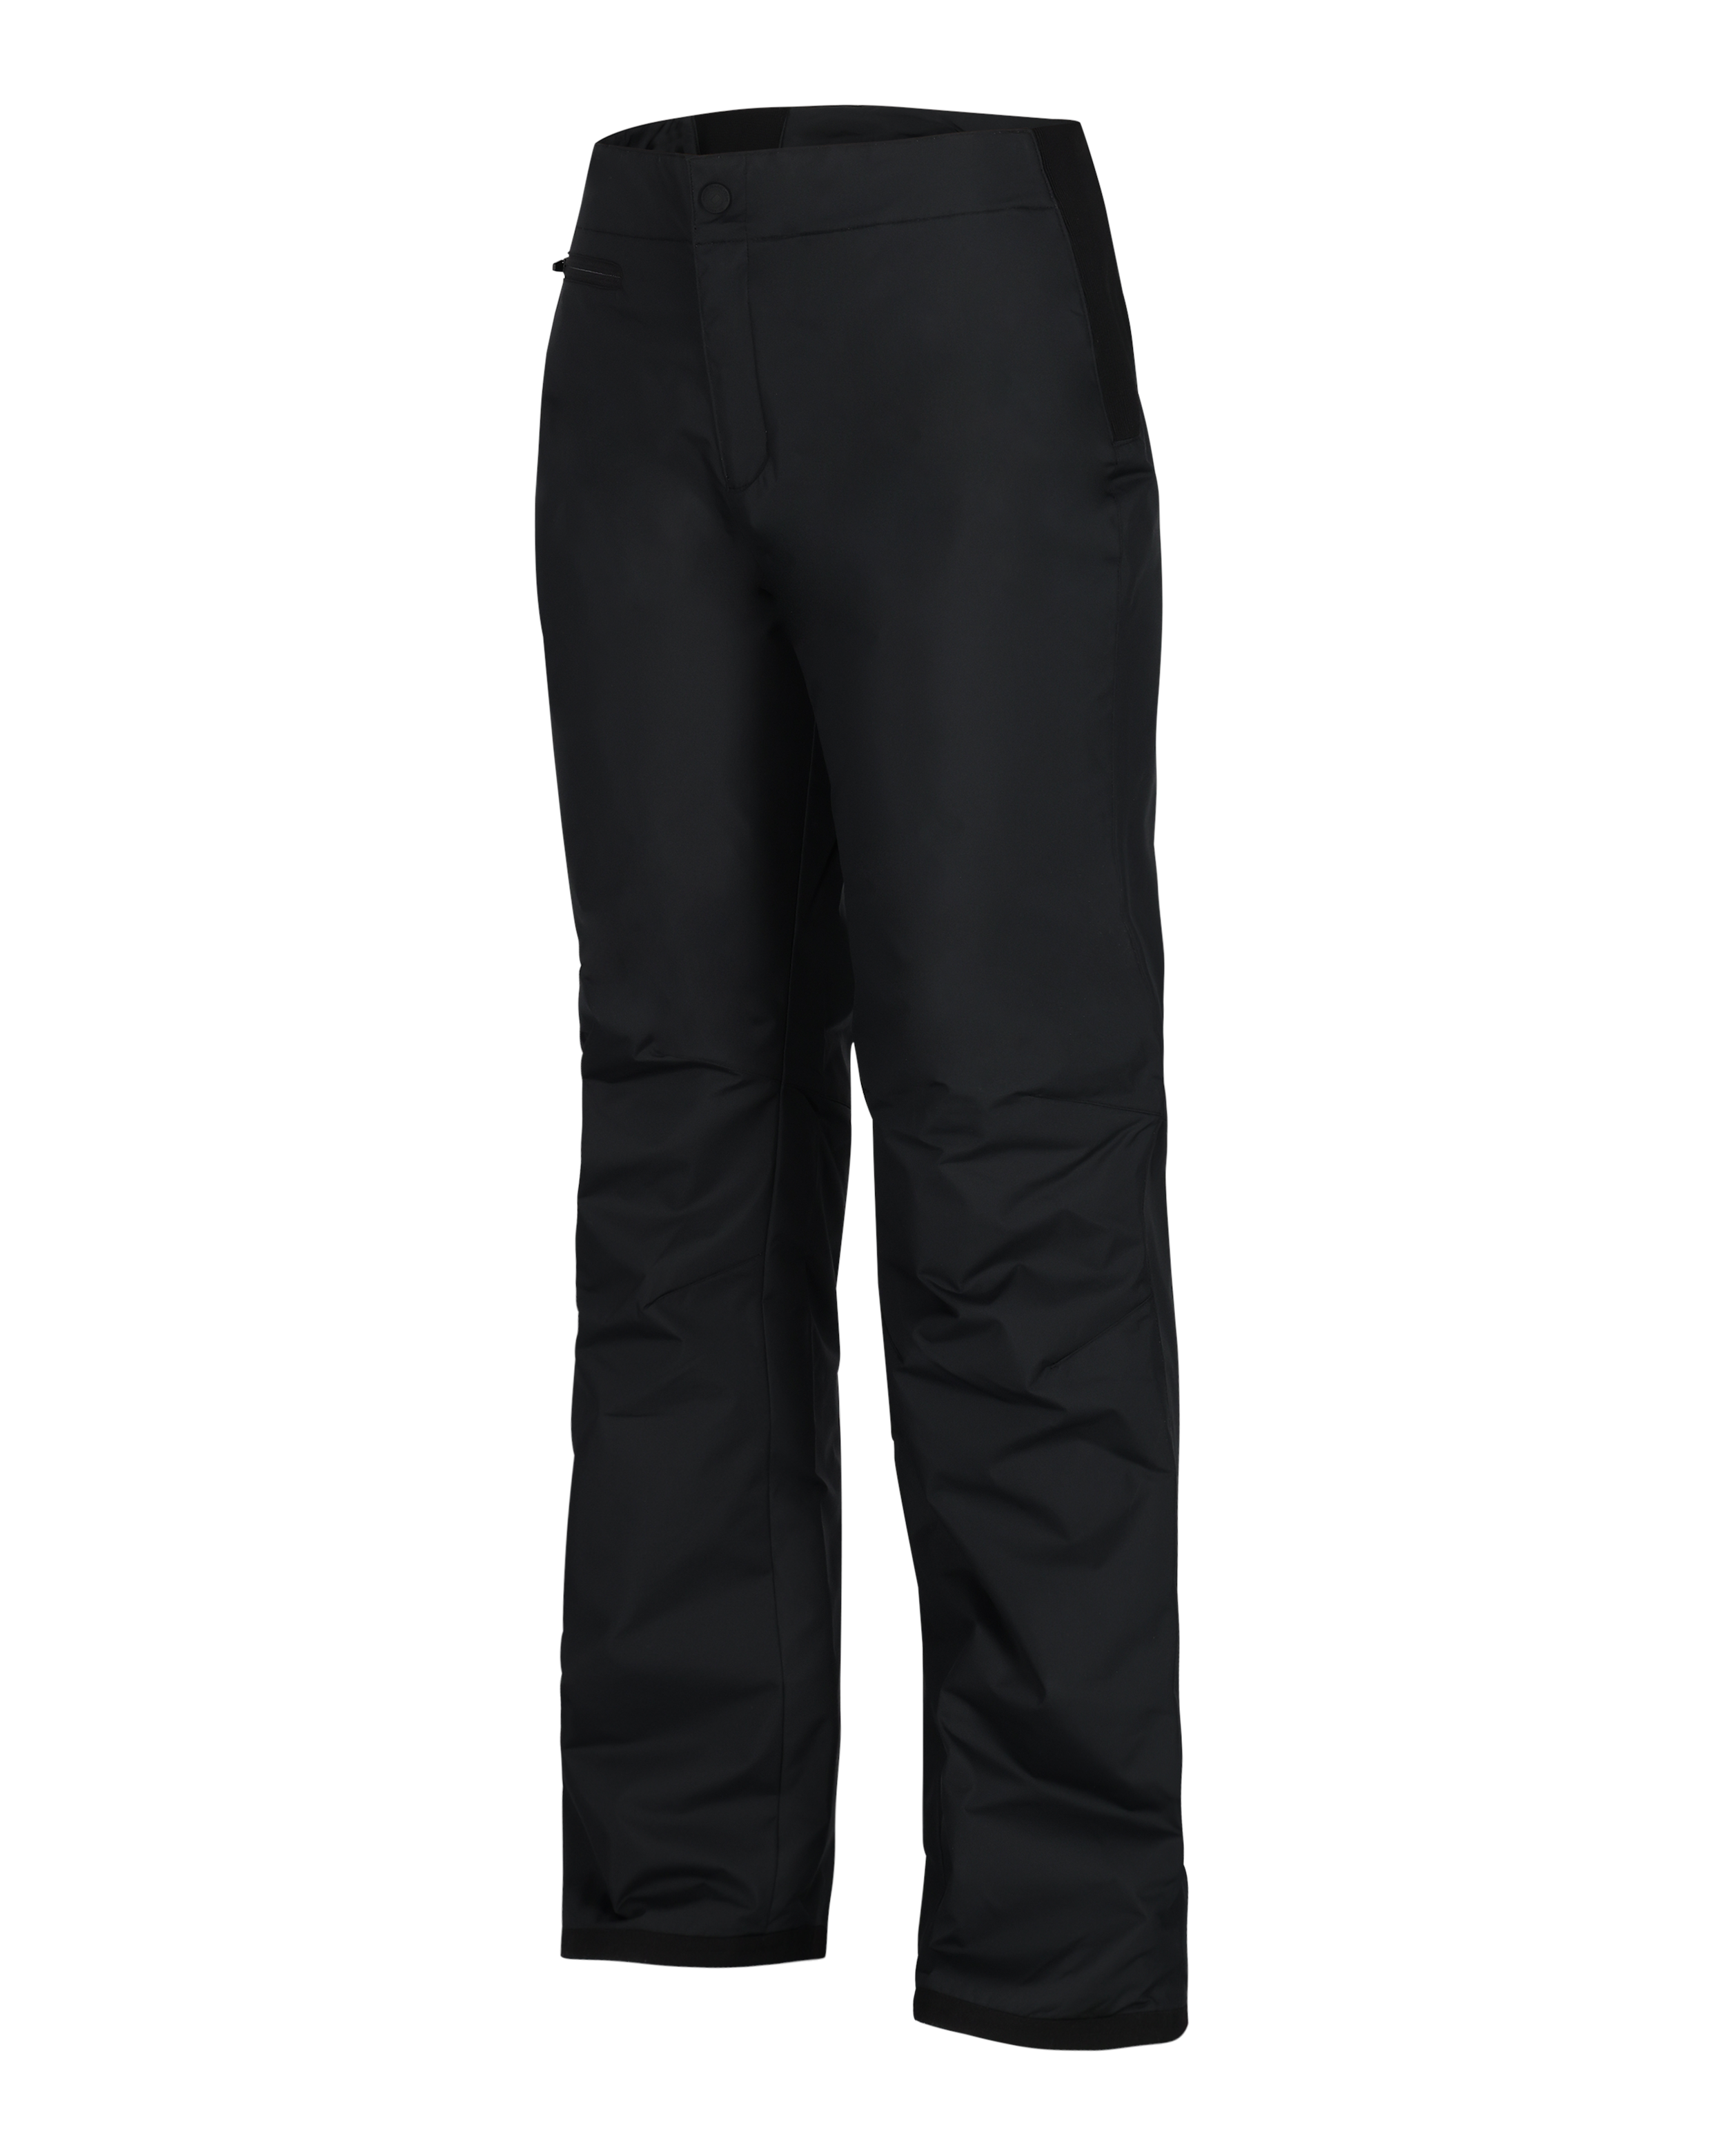 UNDER ARMOUR NAVIGATE Ski Pants Black Charcoal 1315993 001 Women Sz Small  $160